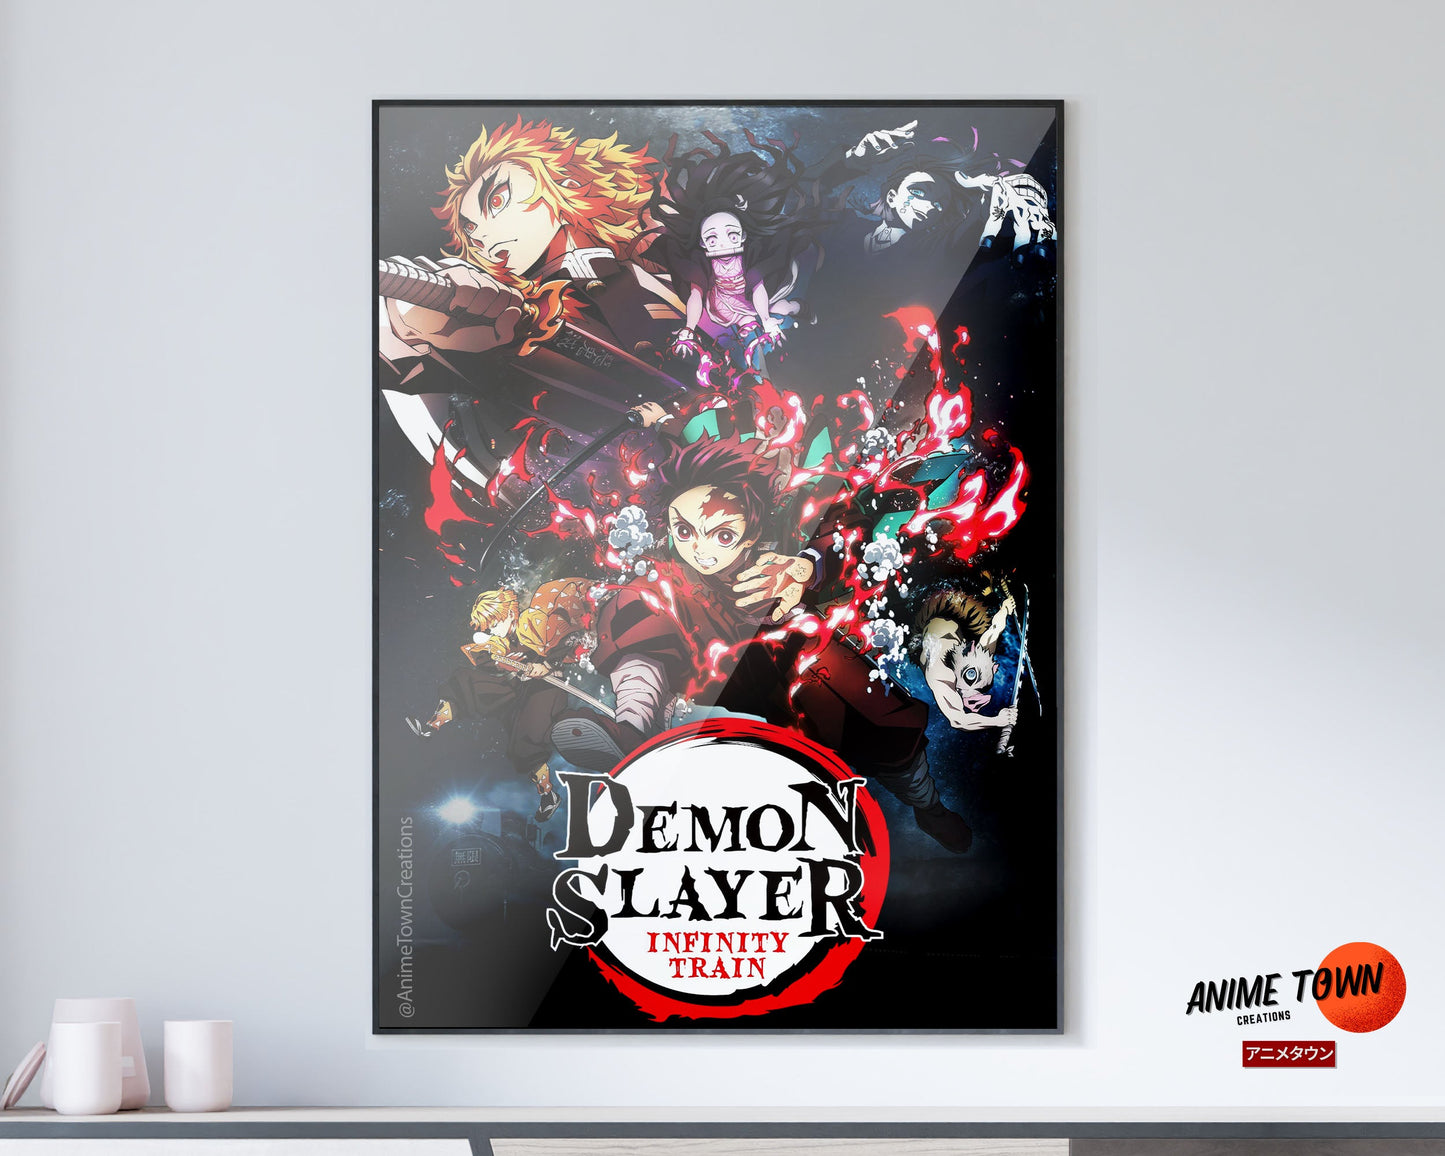 Anime Town Creations Poster Demon Slayer Infinity Train Movie 5" x 7" Home Goods - Anime Demon Slayer Poster